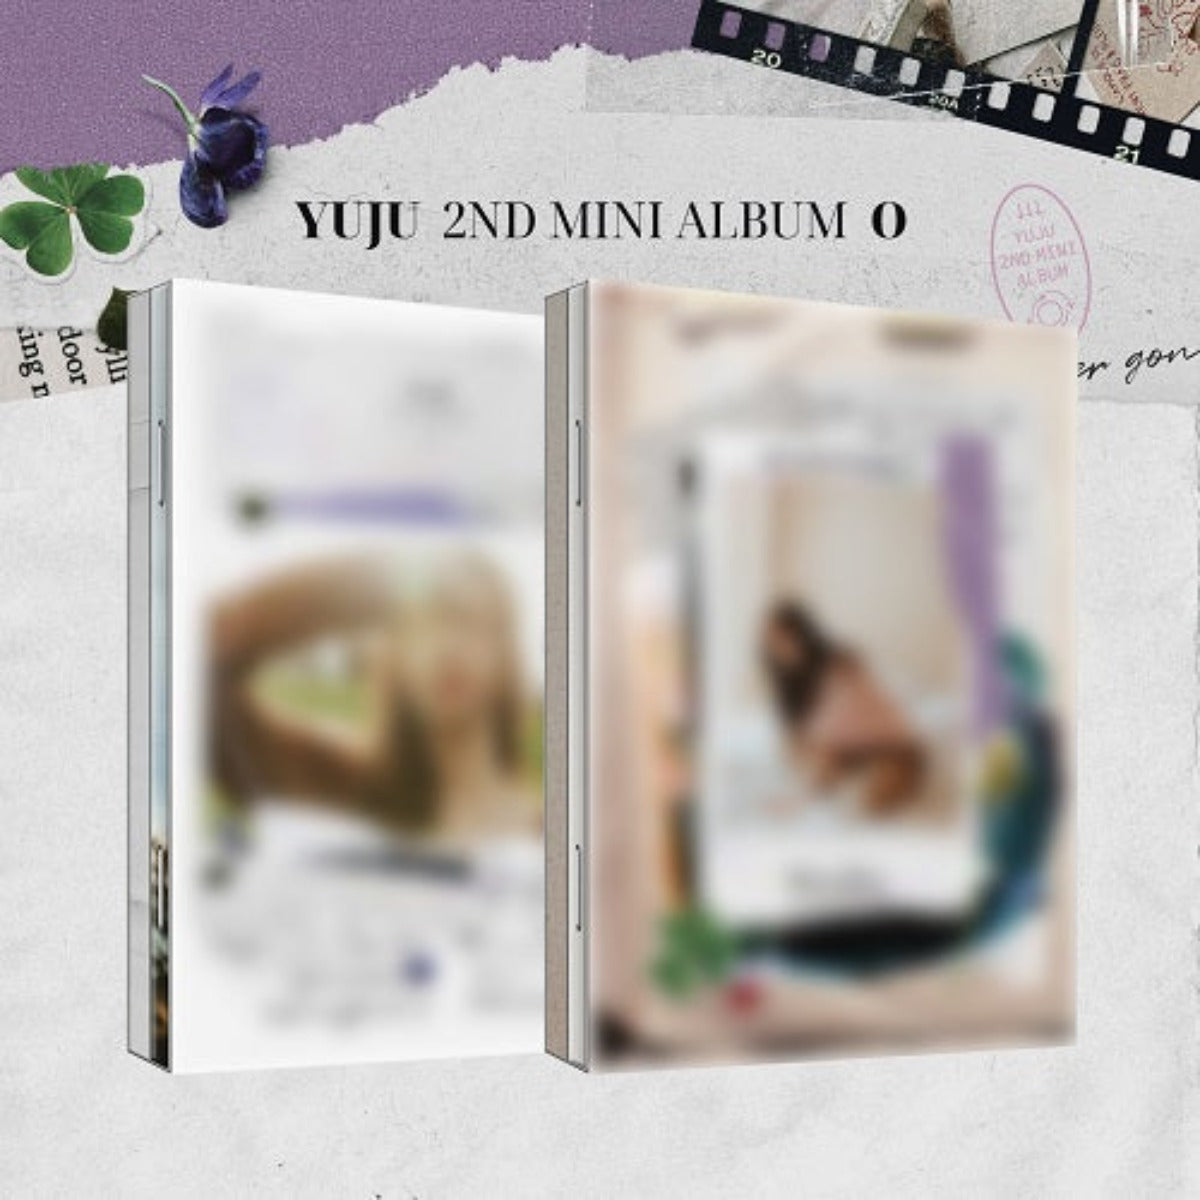 YUJU Mini Album Vol. 2 - O (Random Version)